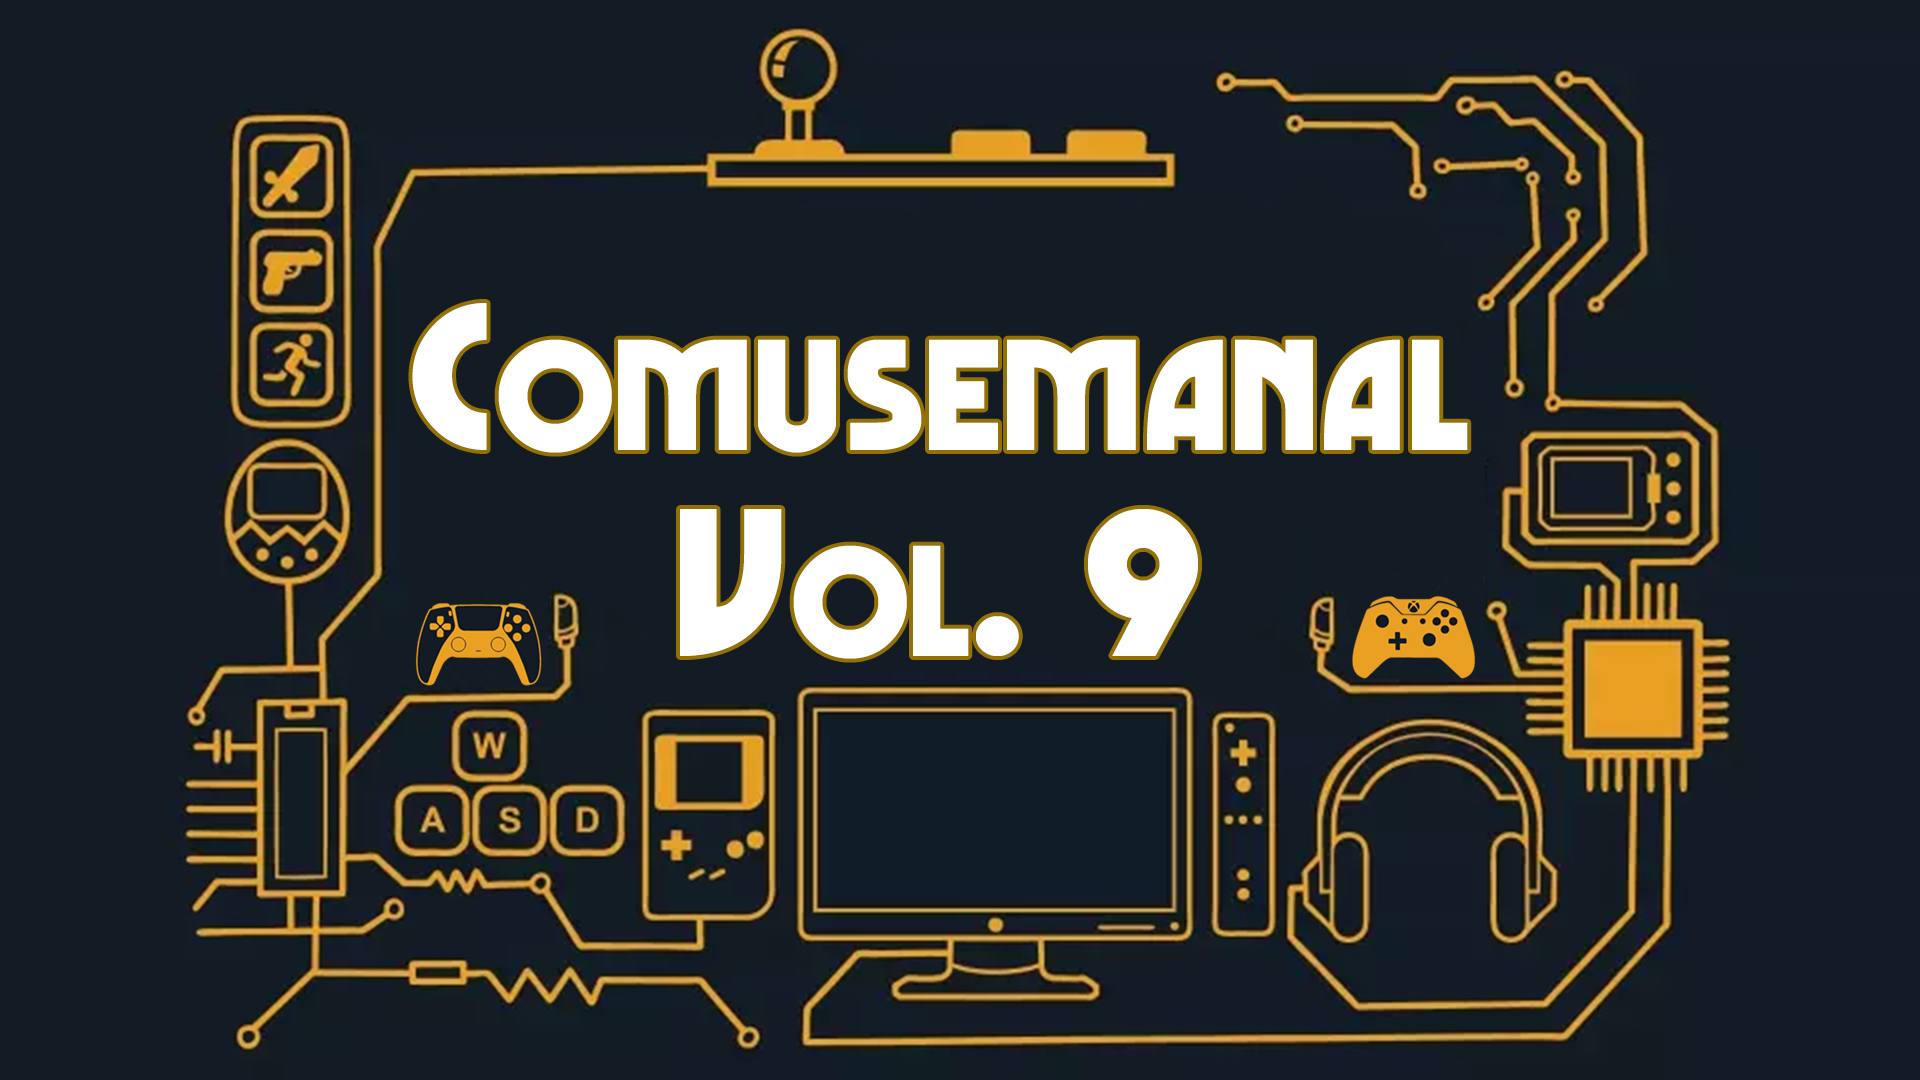 ComuSemanal Vol. 9